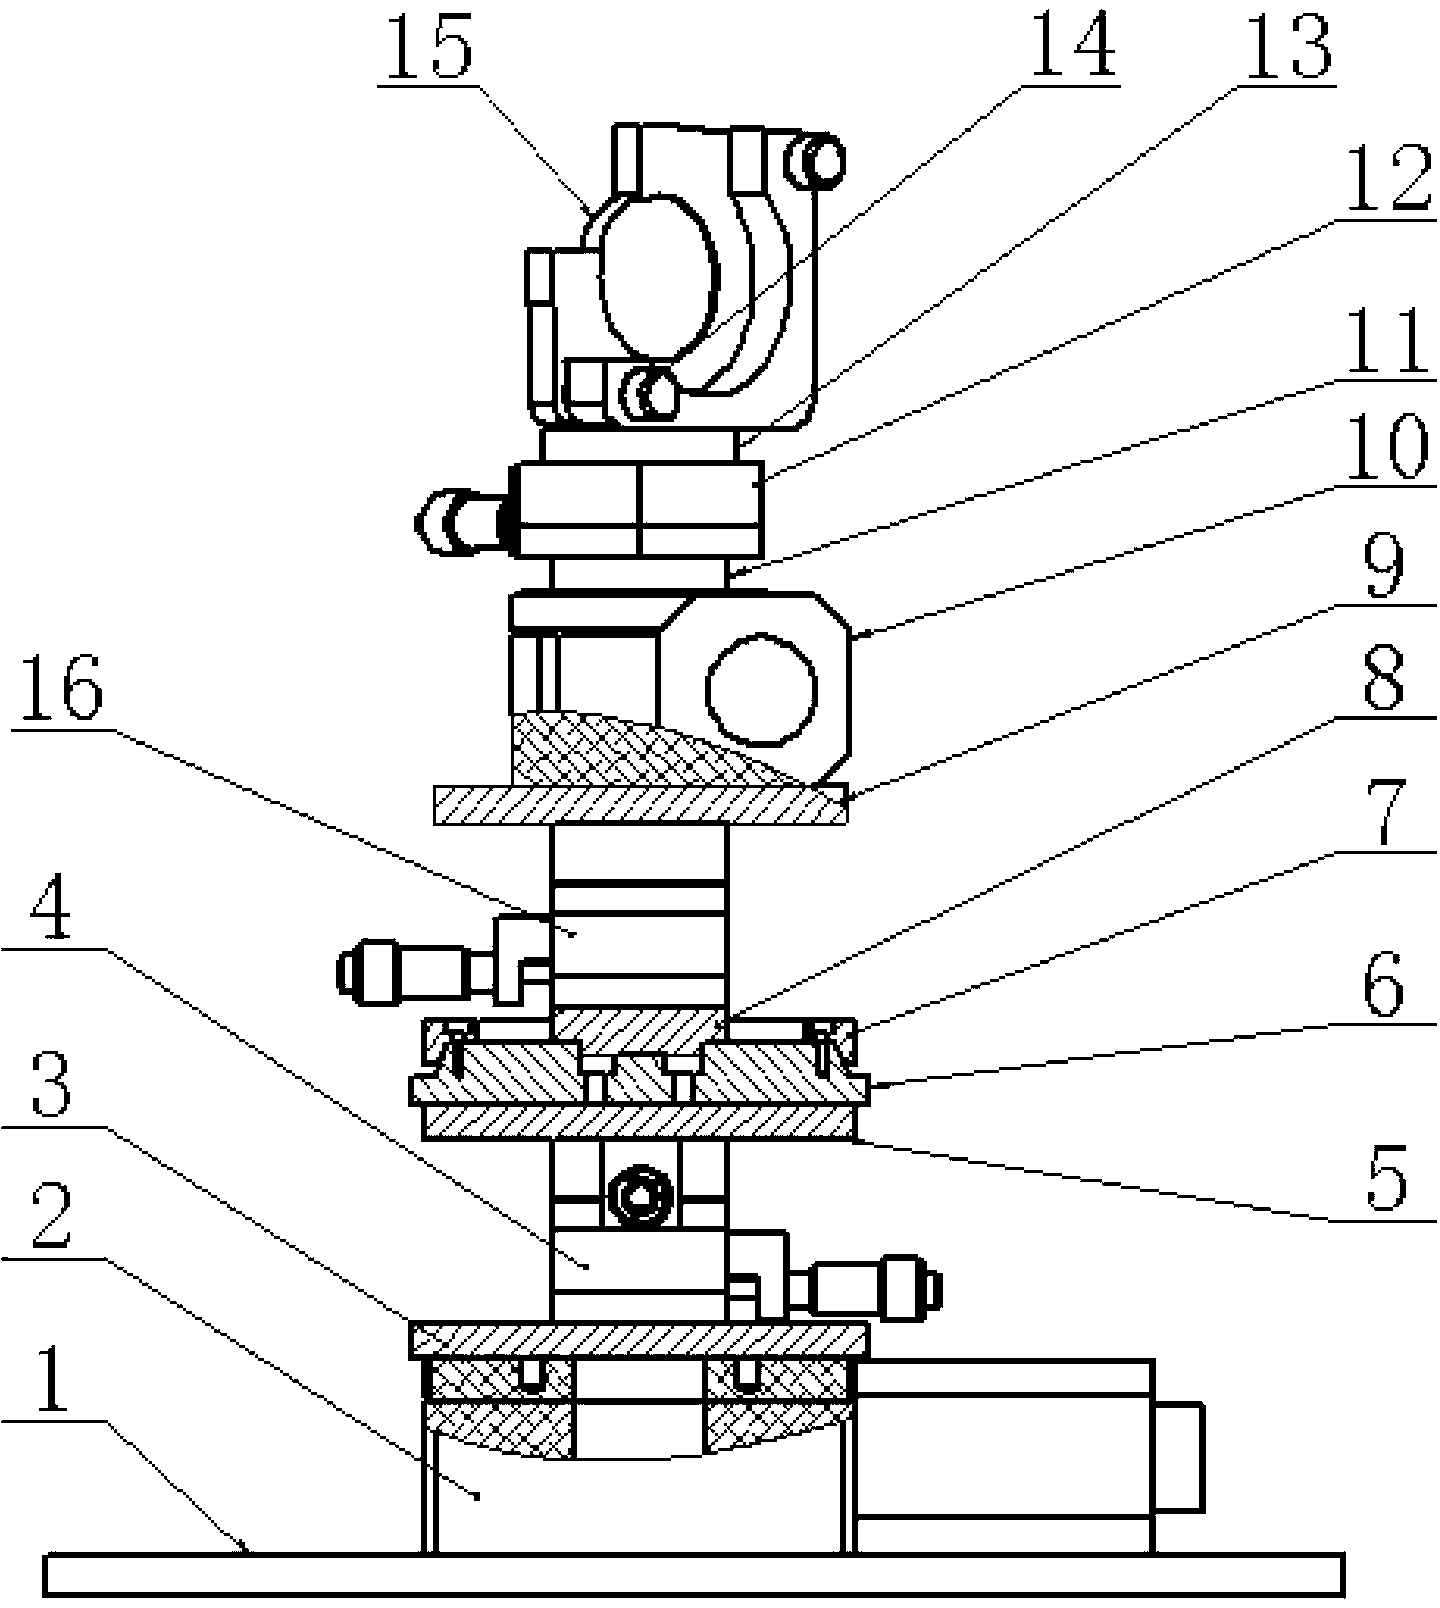 Goniometer verification method based on optical lever